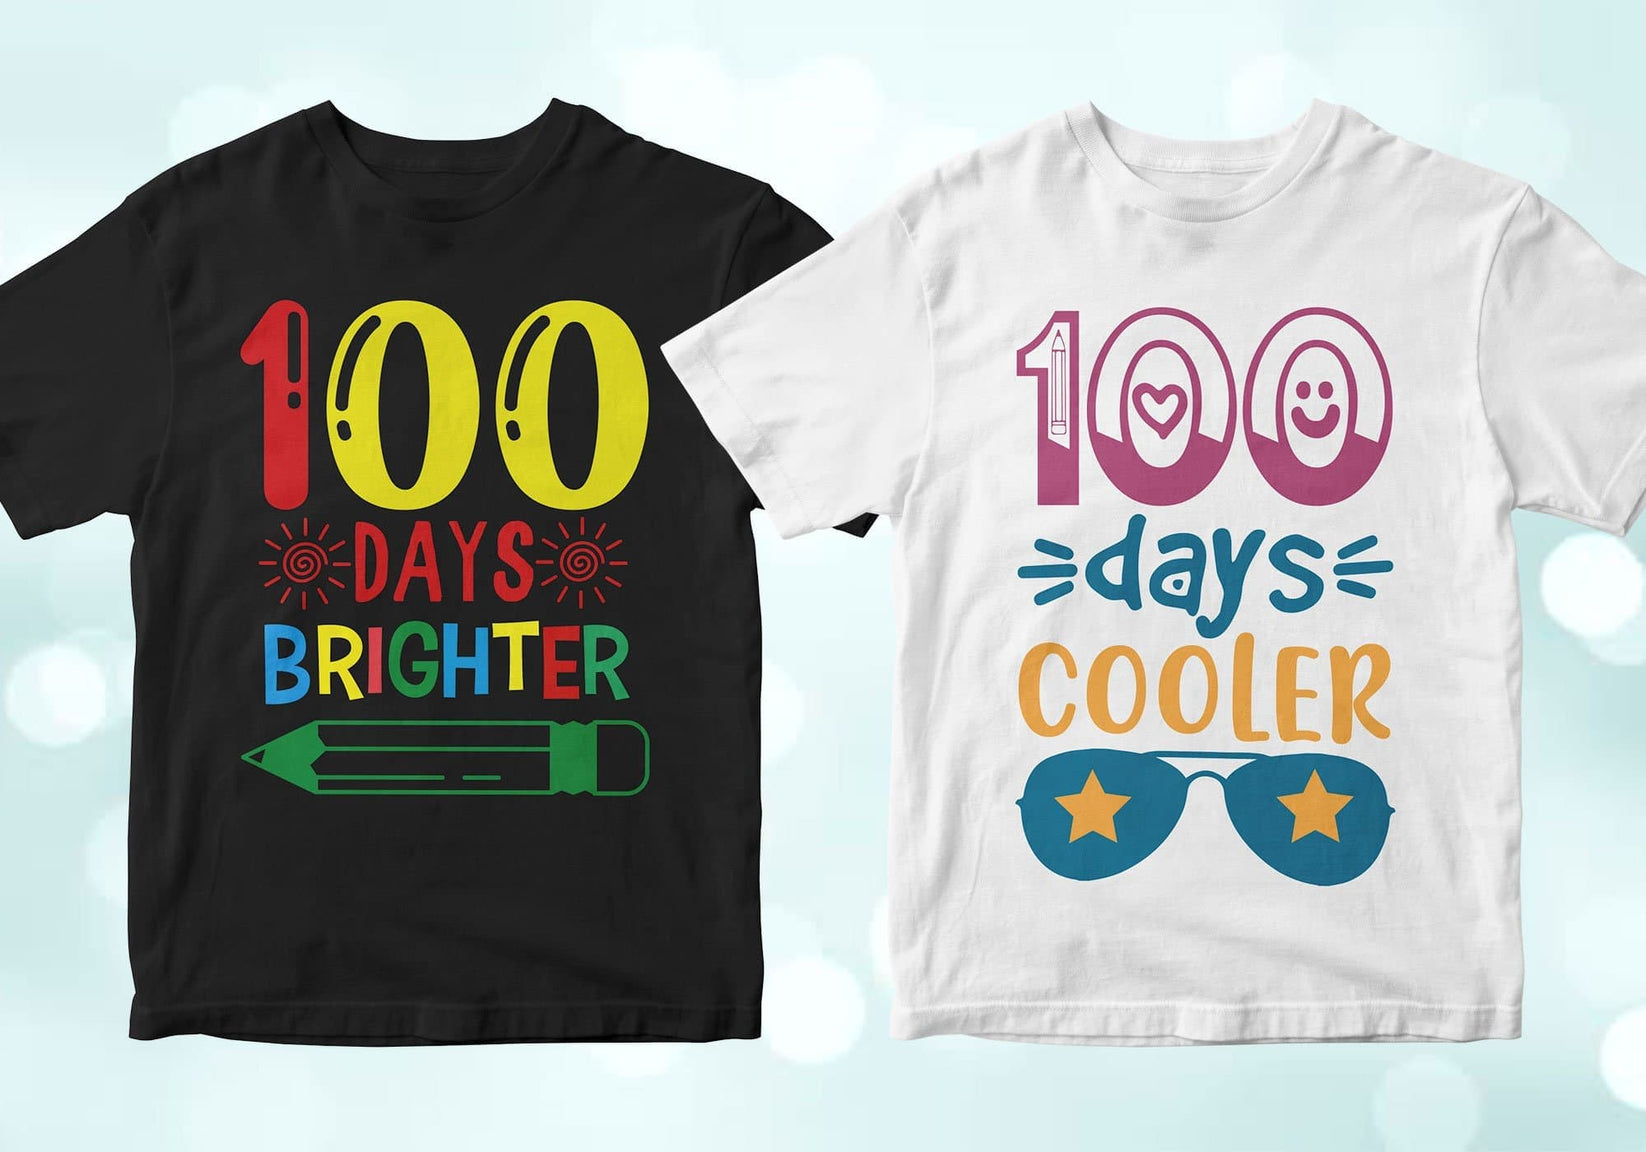 100 days brighter, 100 days cooler